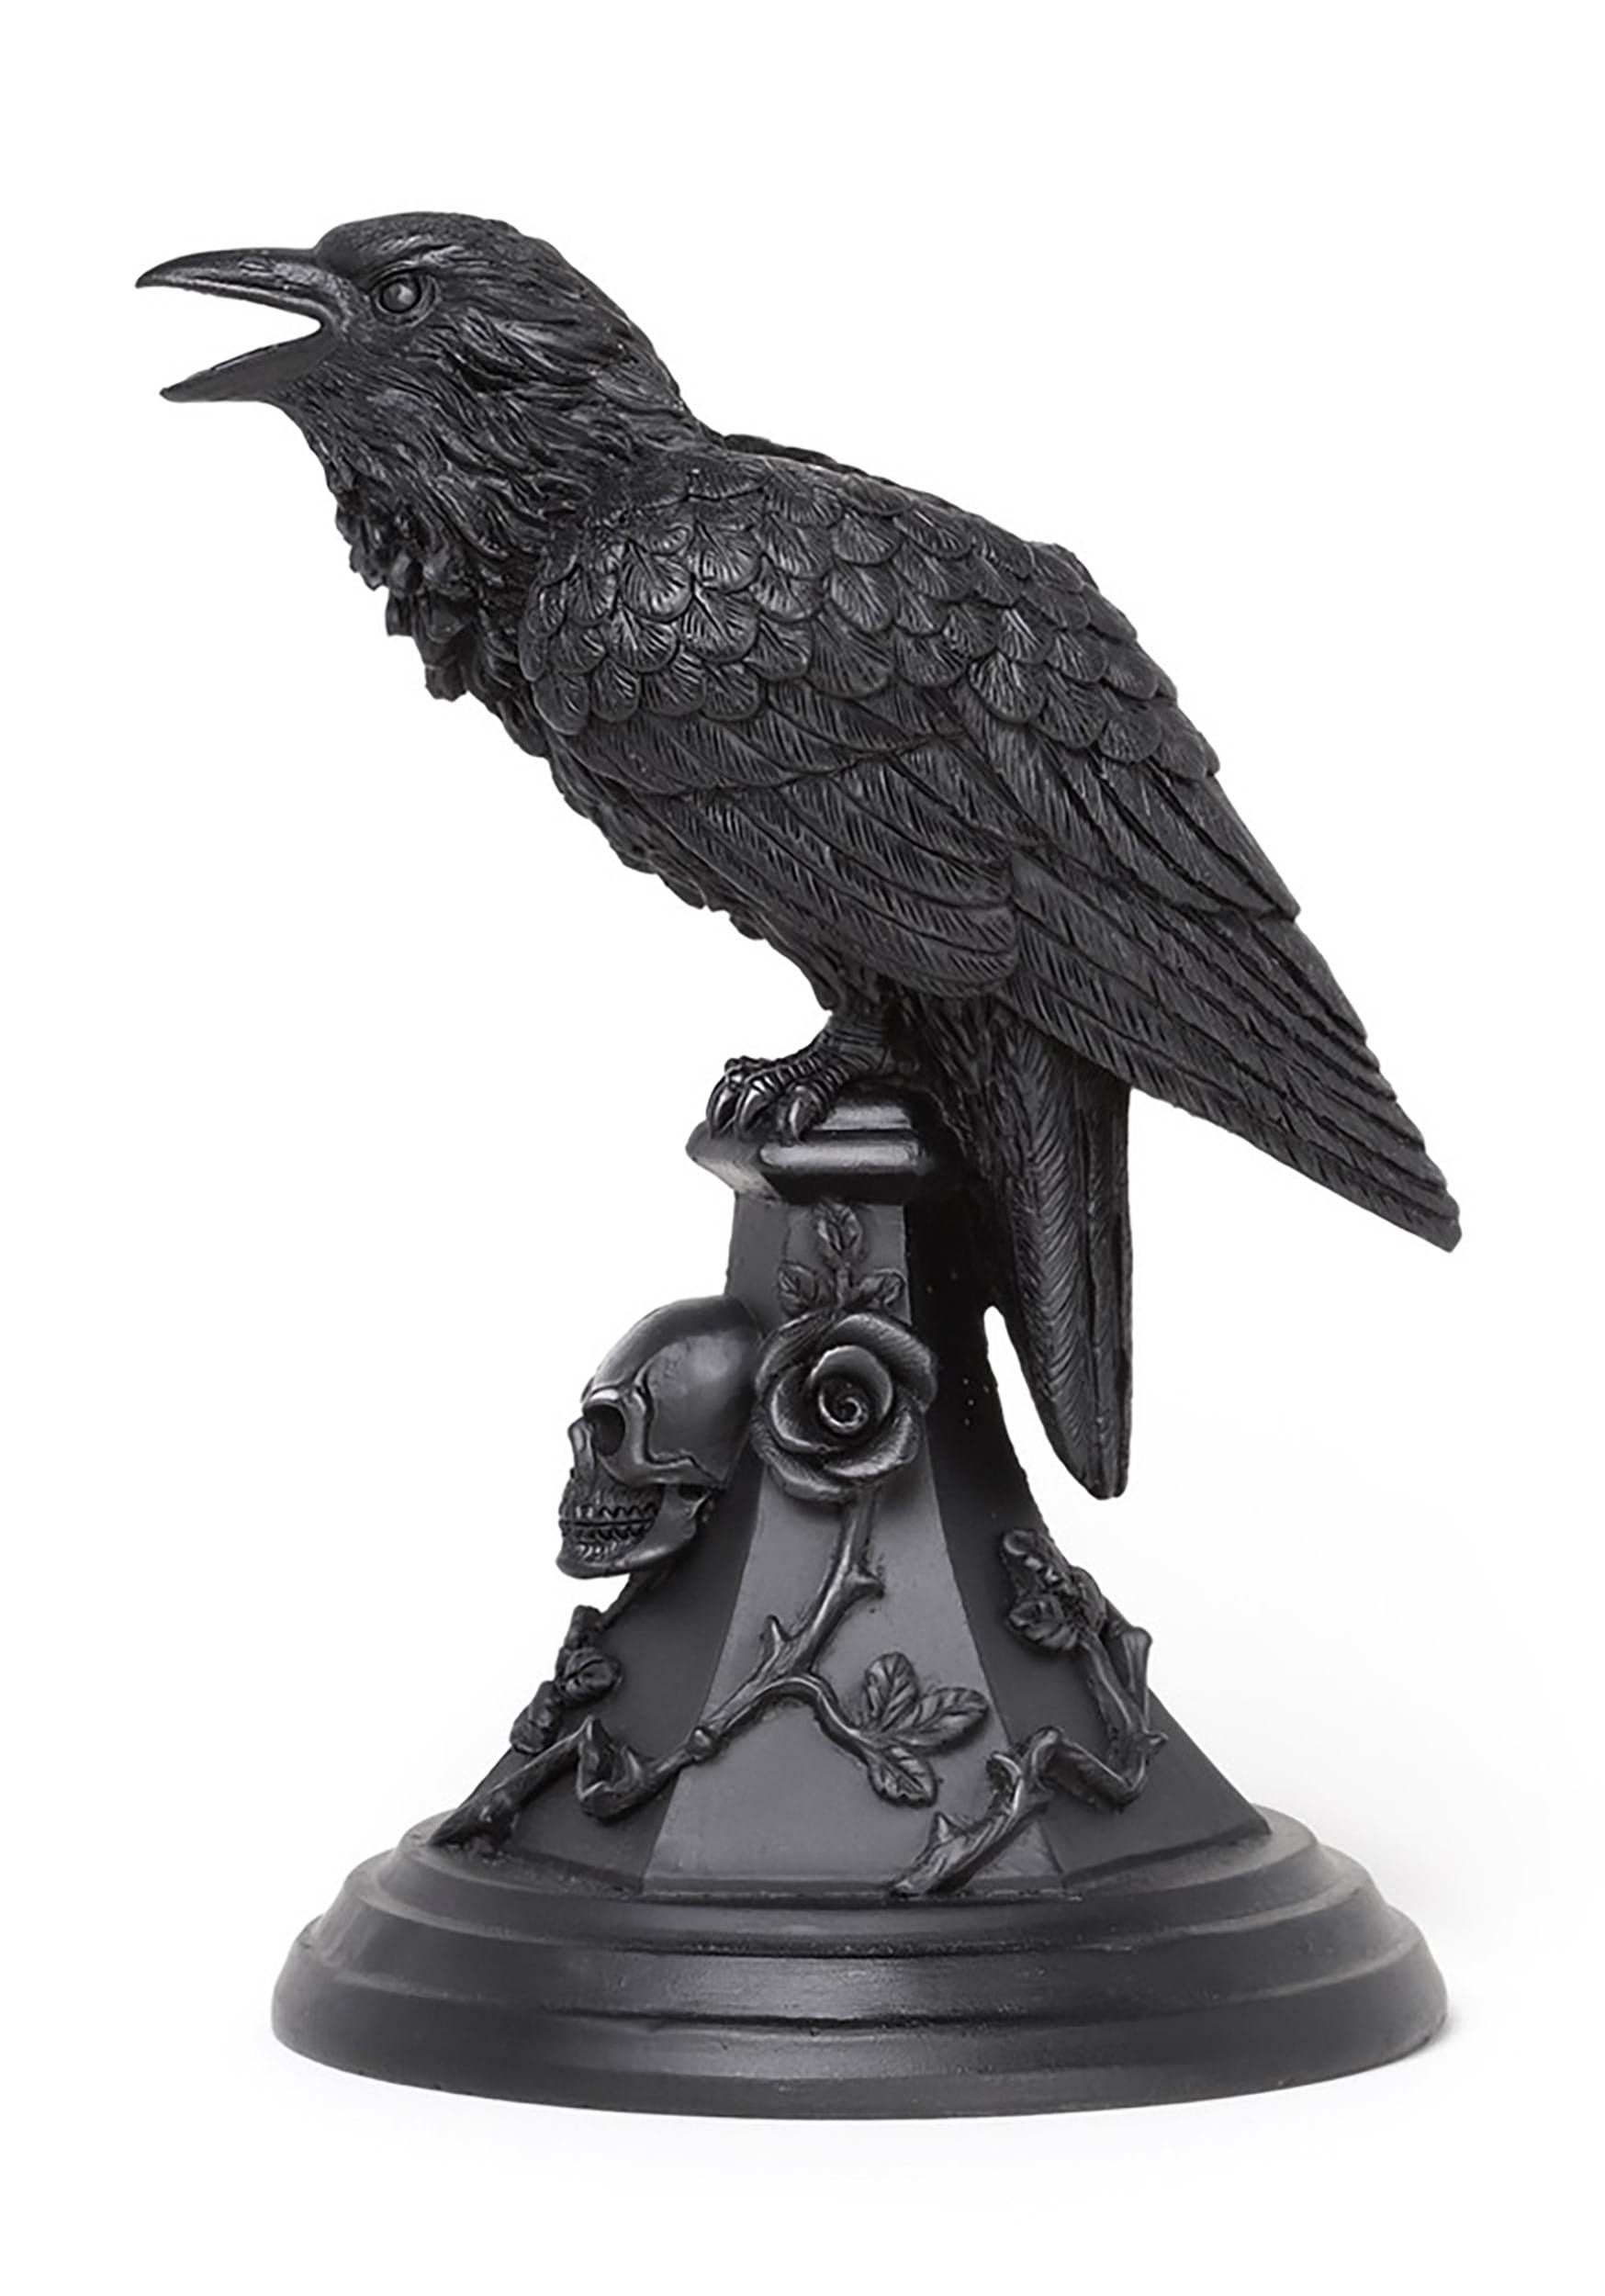 Poe's Gothic Raven Candle Stick Holder Decoration , Gothic Decorations